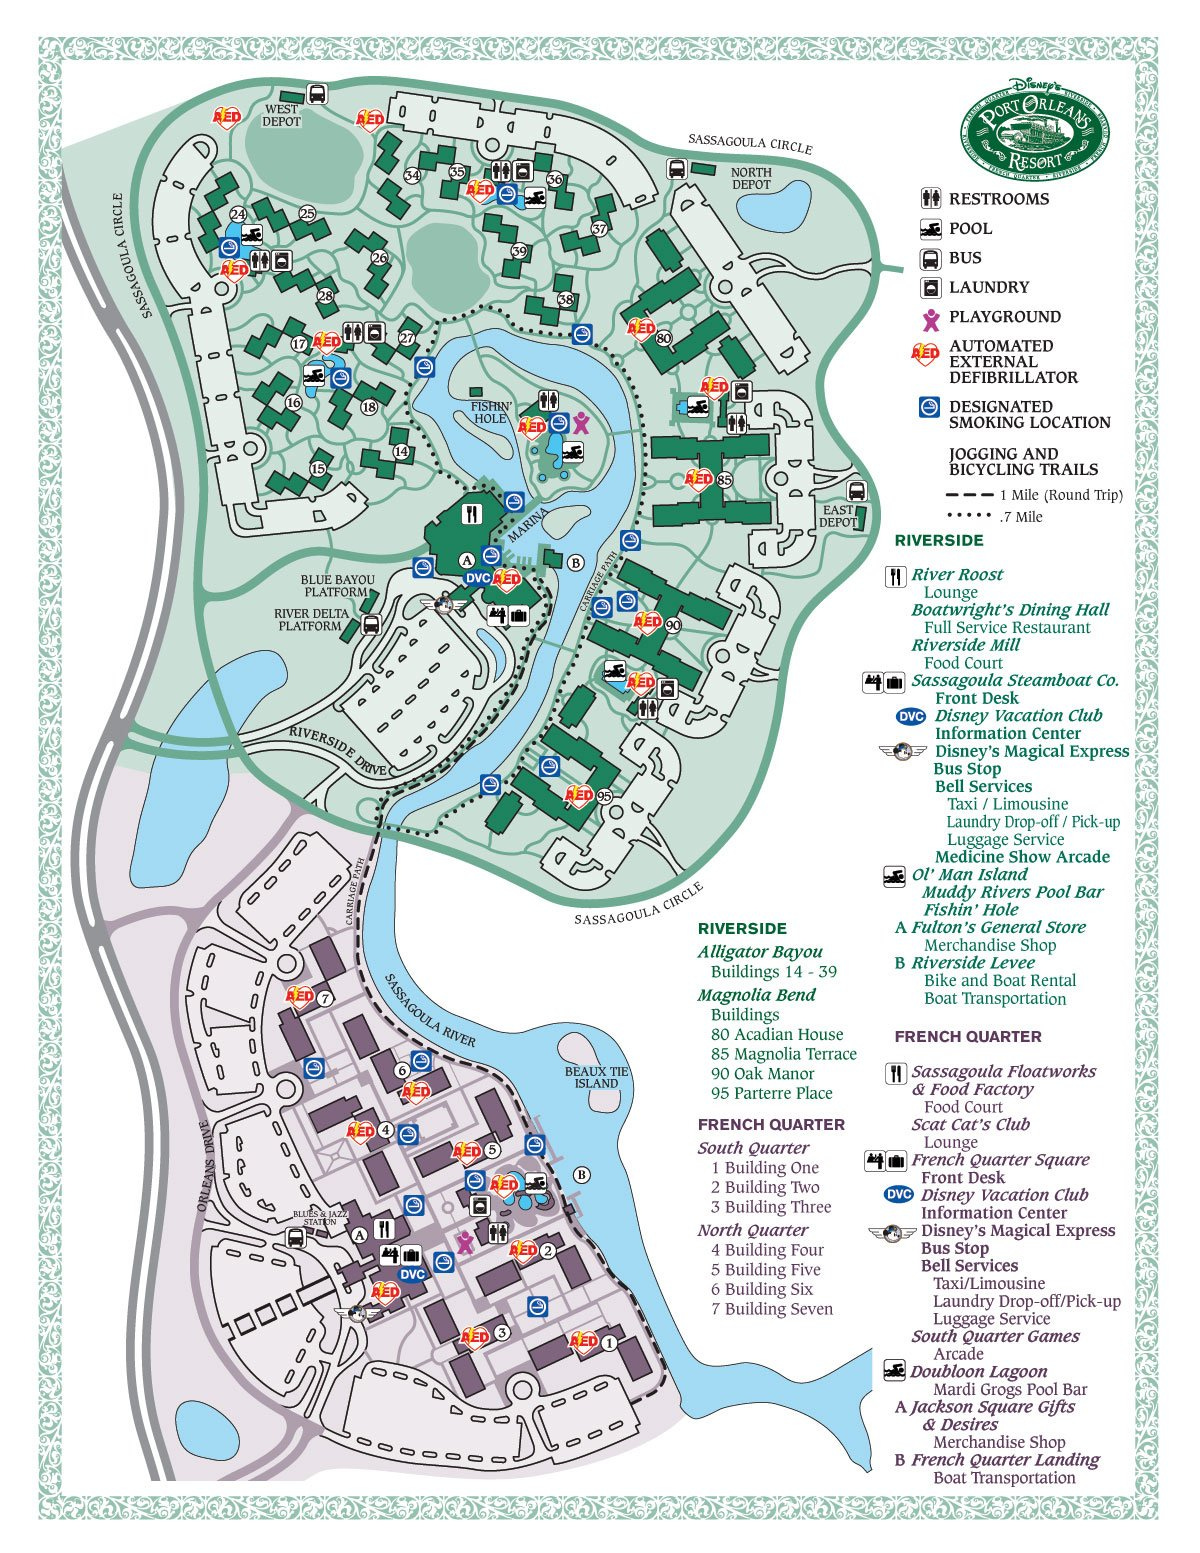 Disney's Port Orleans Riverside map - wdwinfo.com